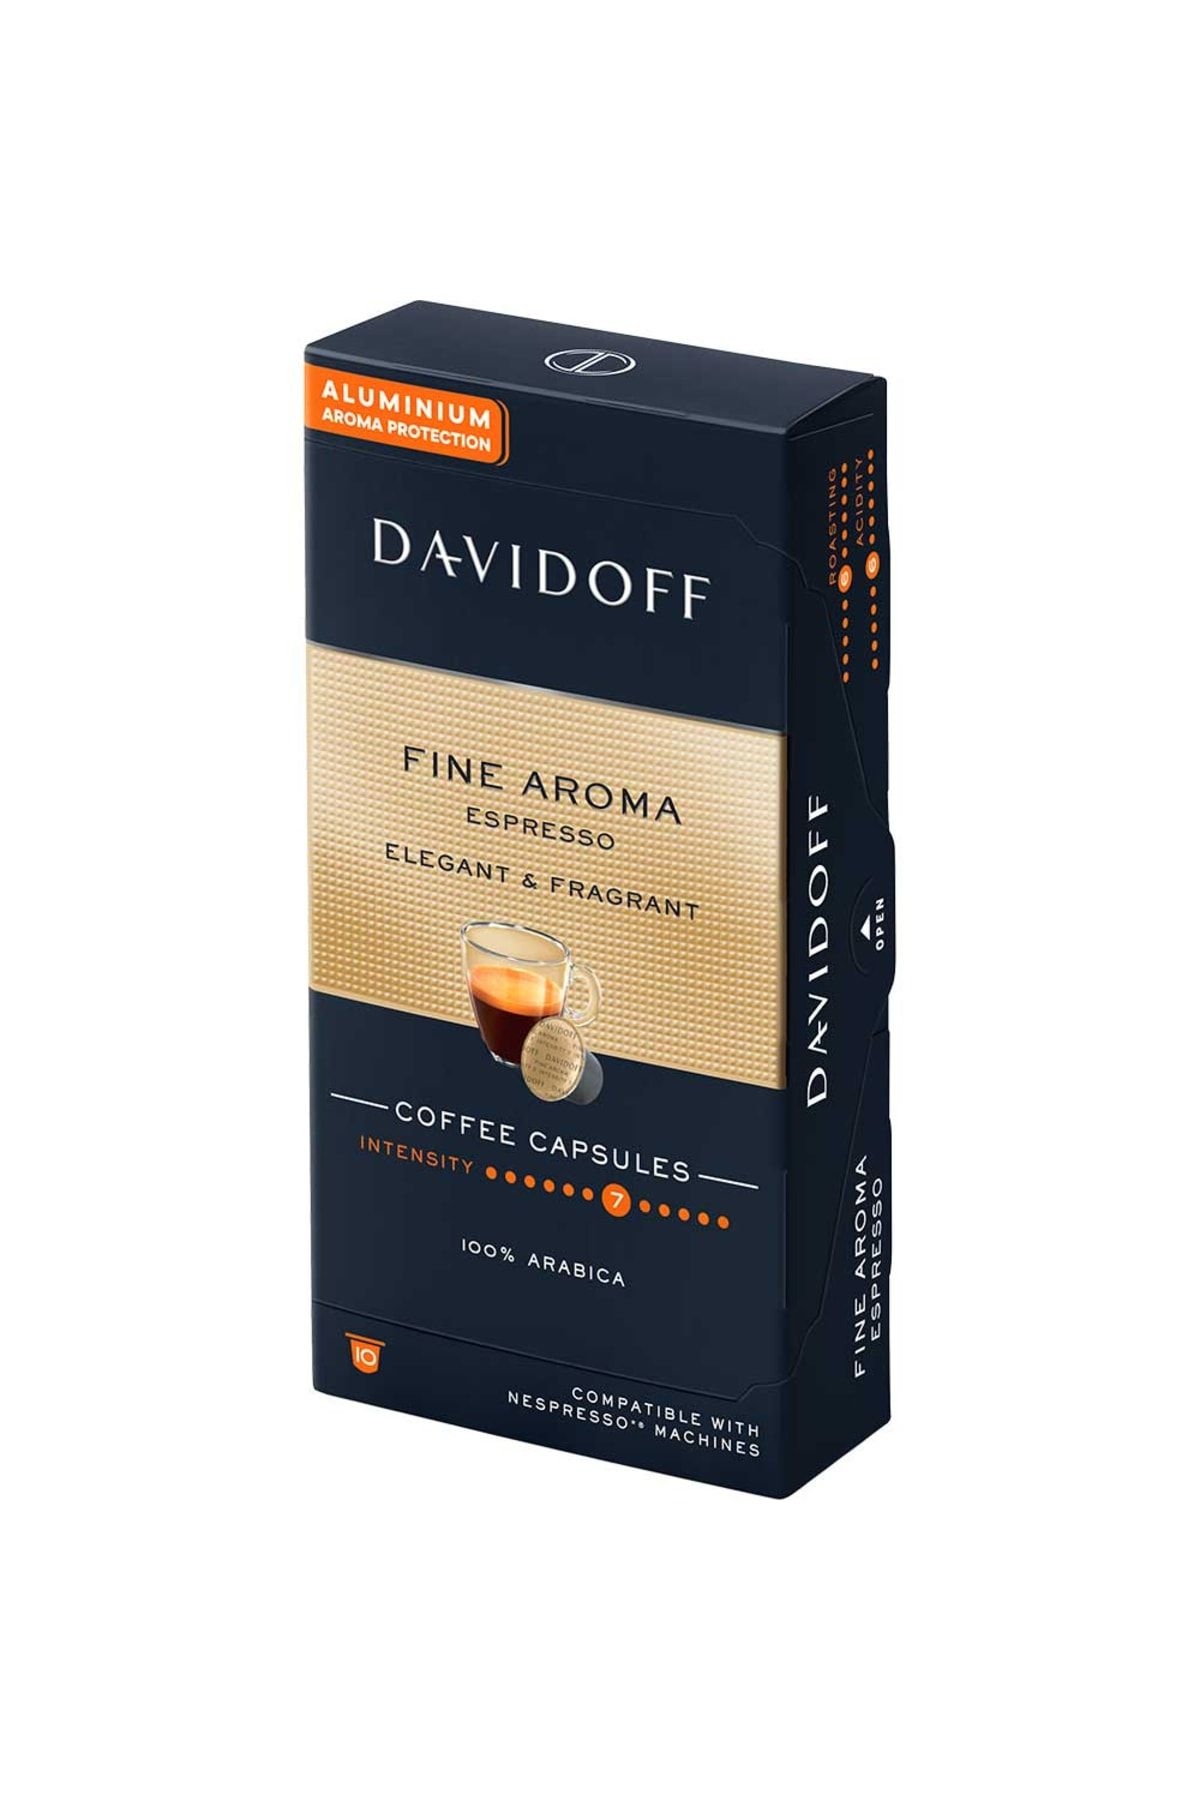 Davidoff Fıne Aroma Espresso Elegant & Fragrant Aluminium Kapsül Kahve 10'lu (nespresso Uyumlu)